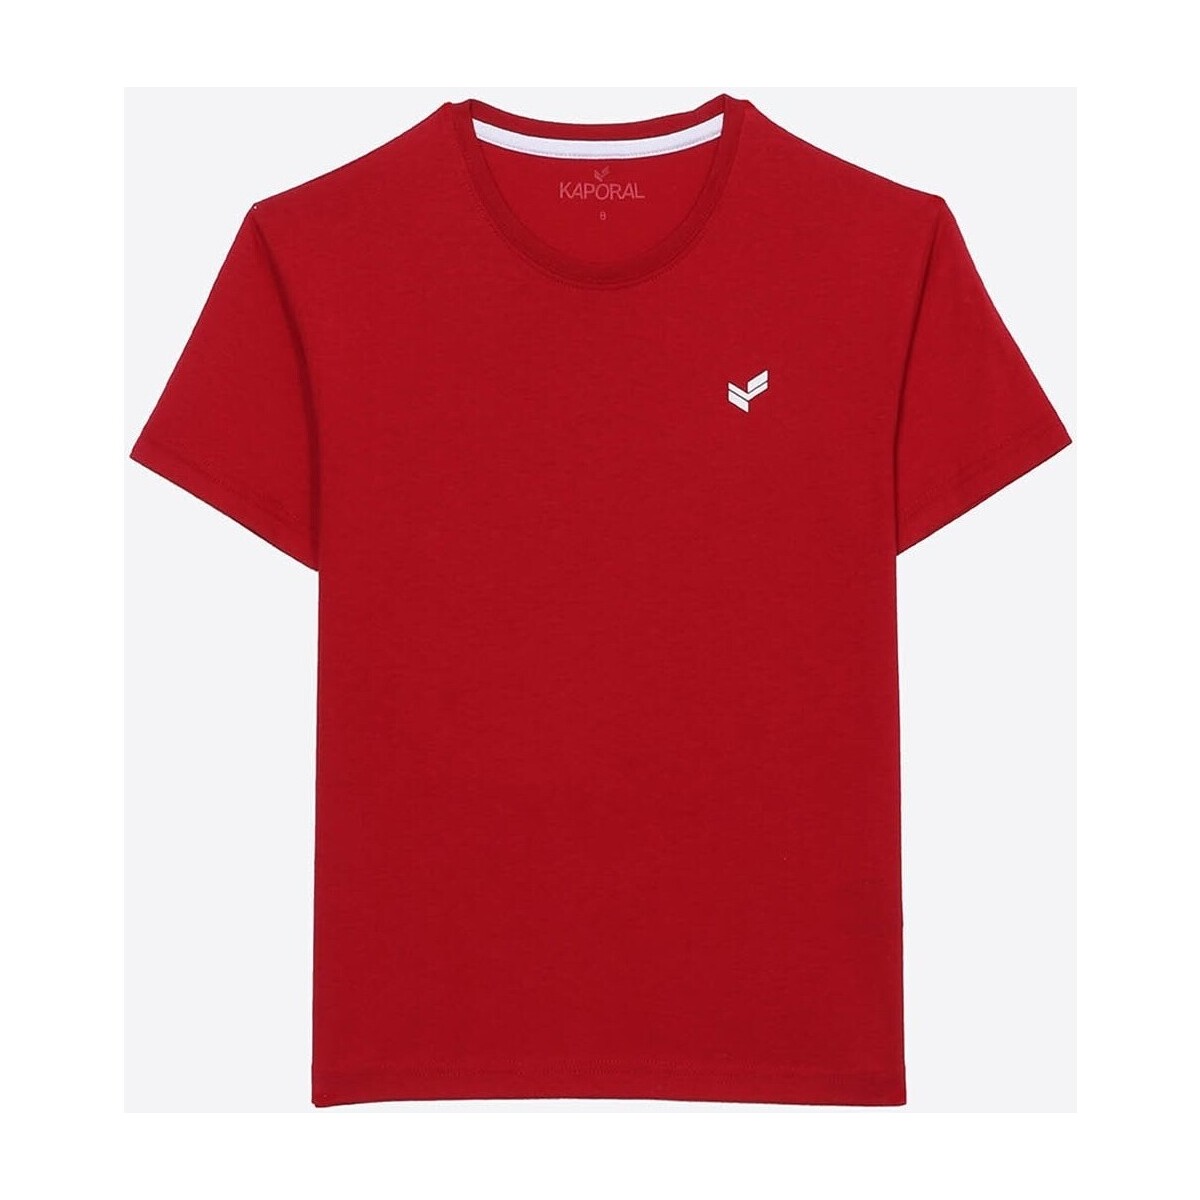 Kaporal Autres Junior - T-shirt - rouge vqCUA7UI